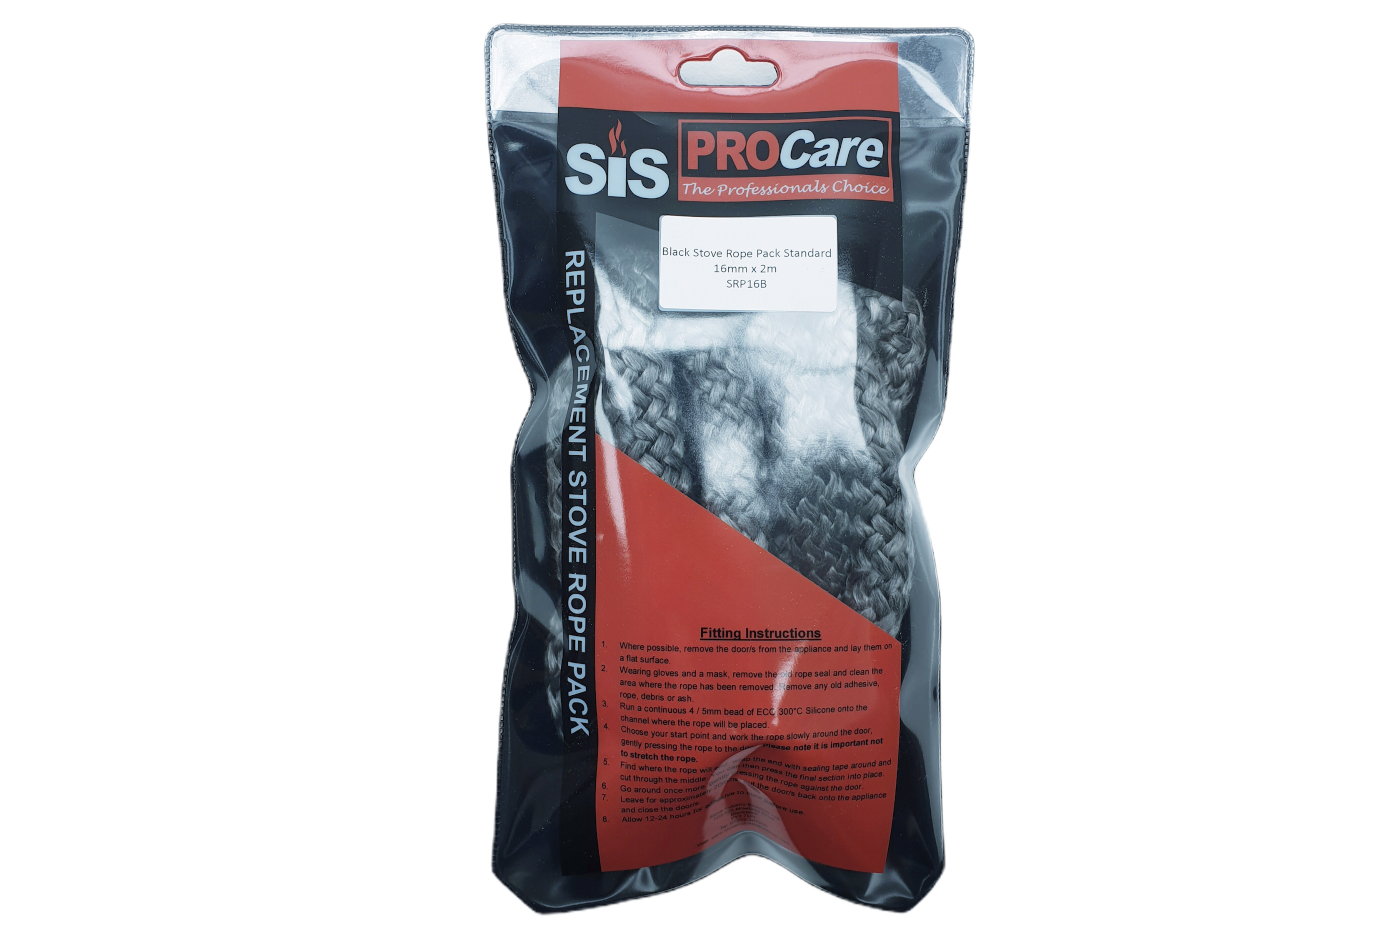 SiS Procare Black 16 milimetre x 2 metre Standard Stove Rope Pack - product code SRP16B